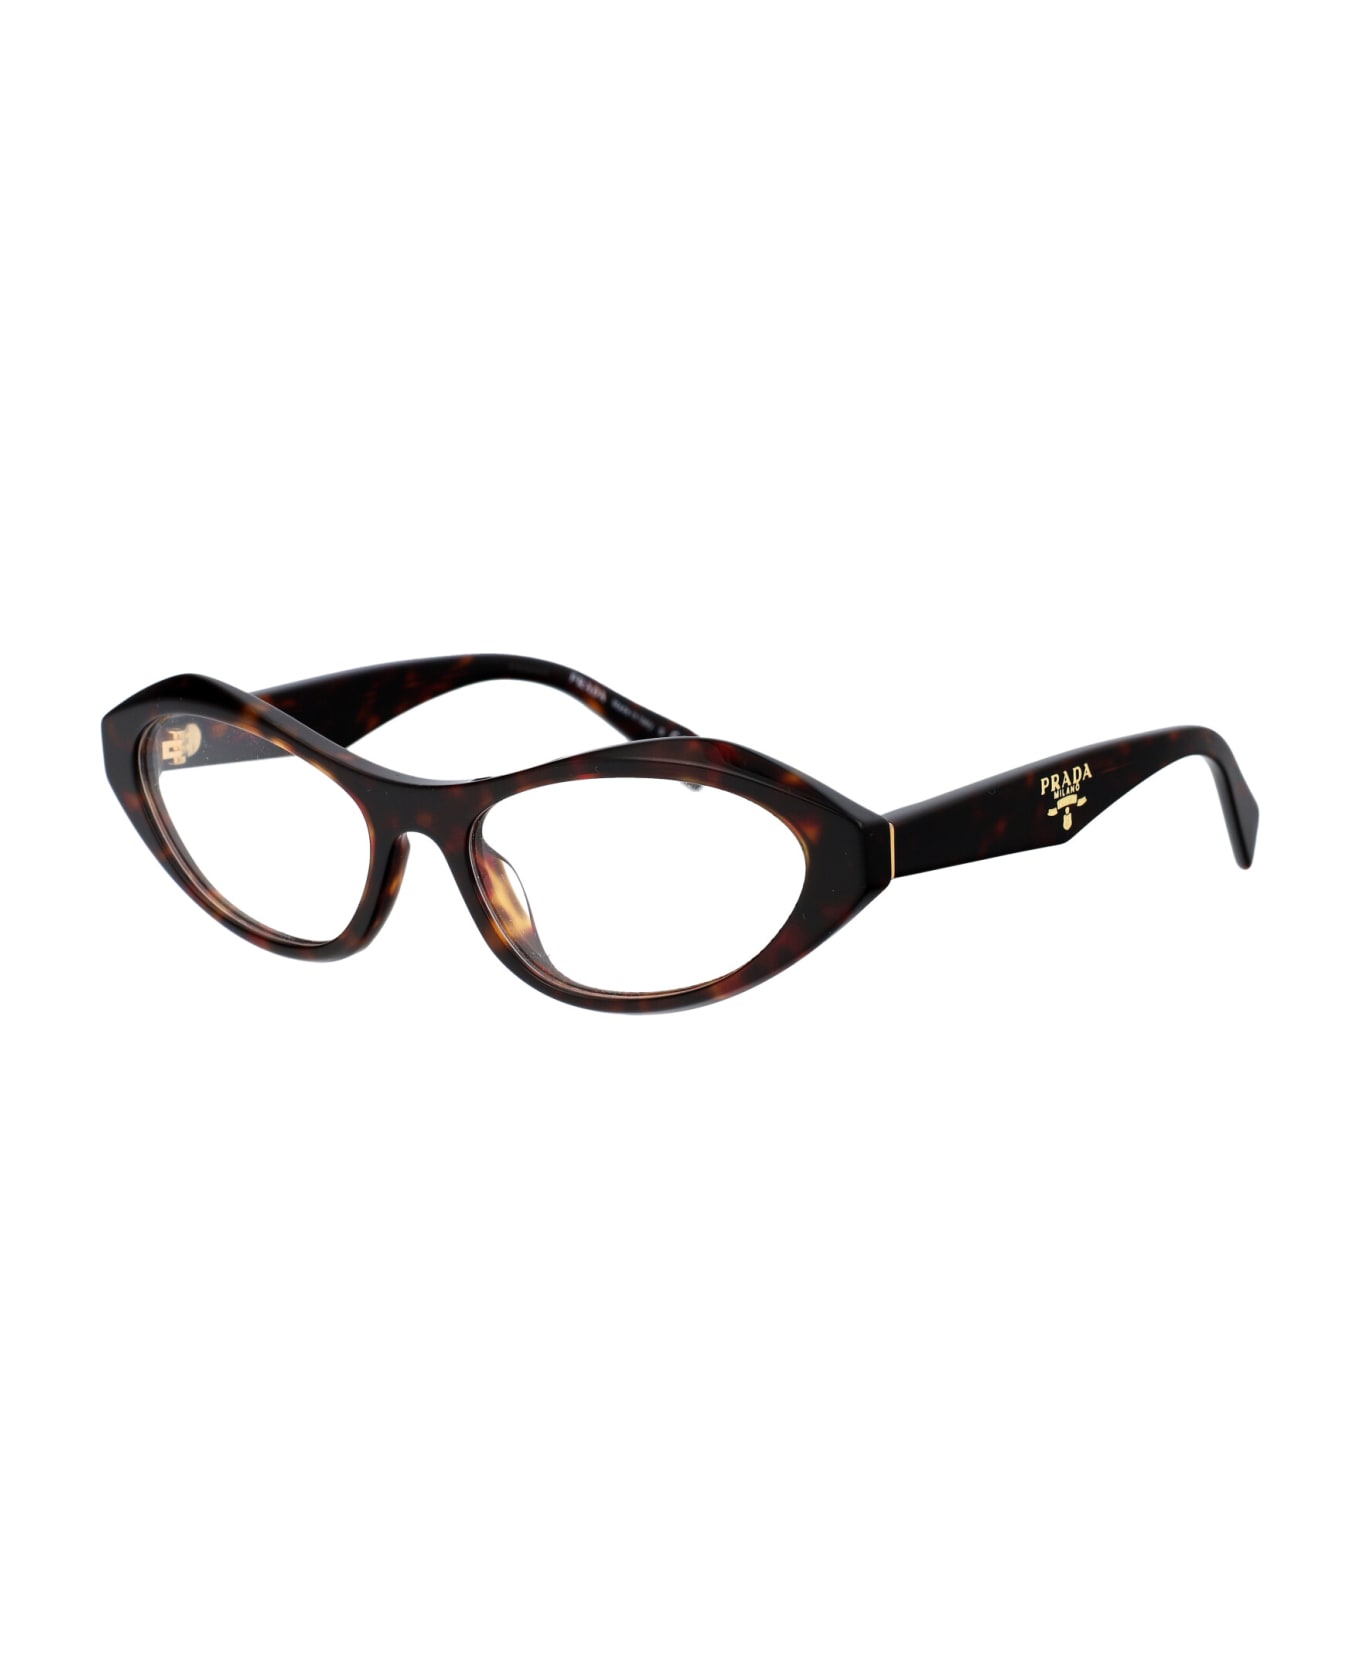 Prada Eyewear 0pr A21v Glasses - 17N1O1 Root Tortoise